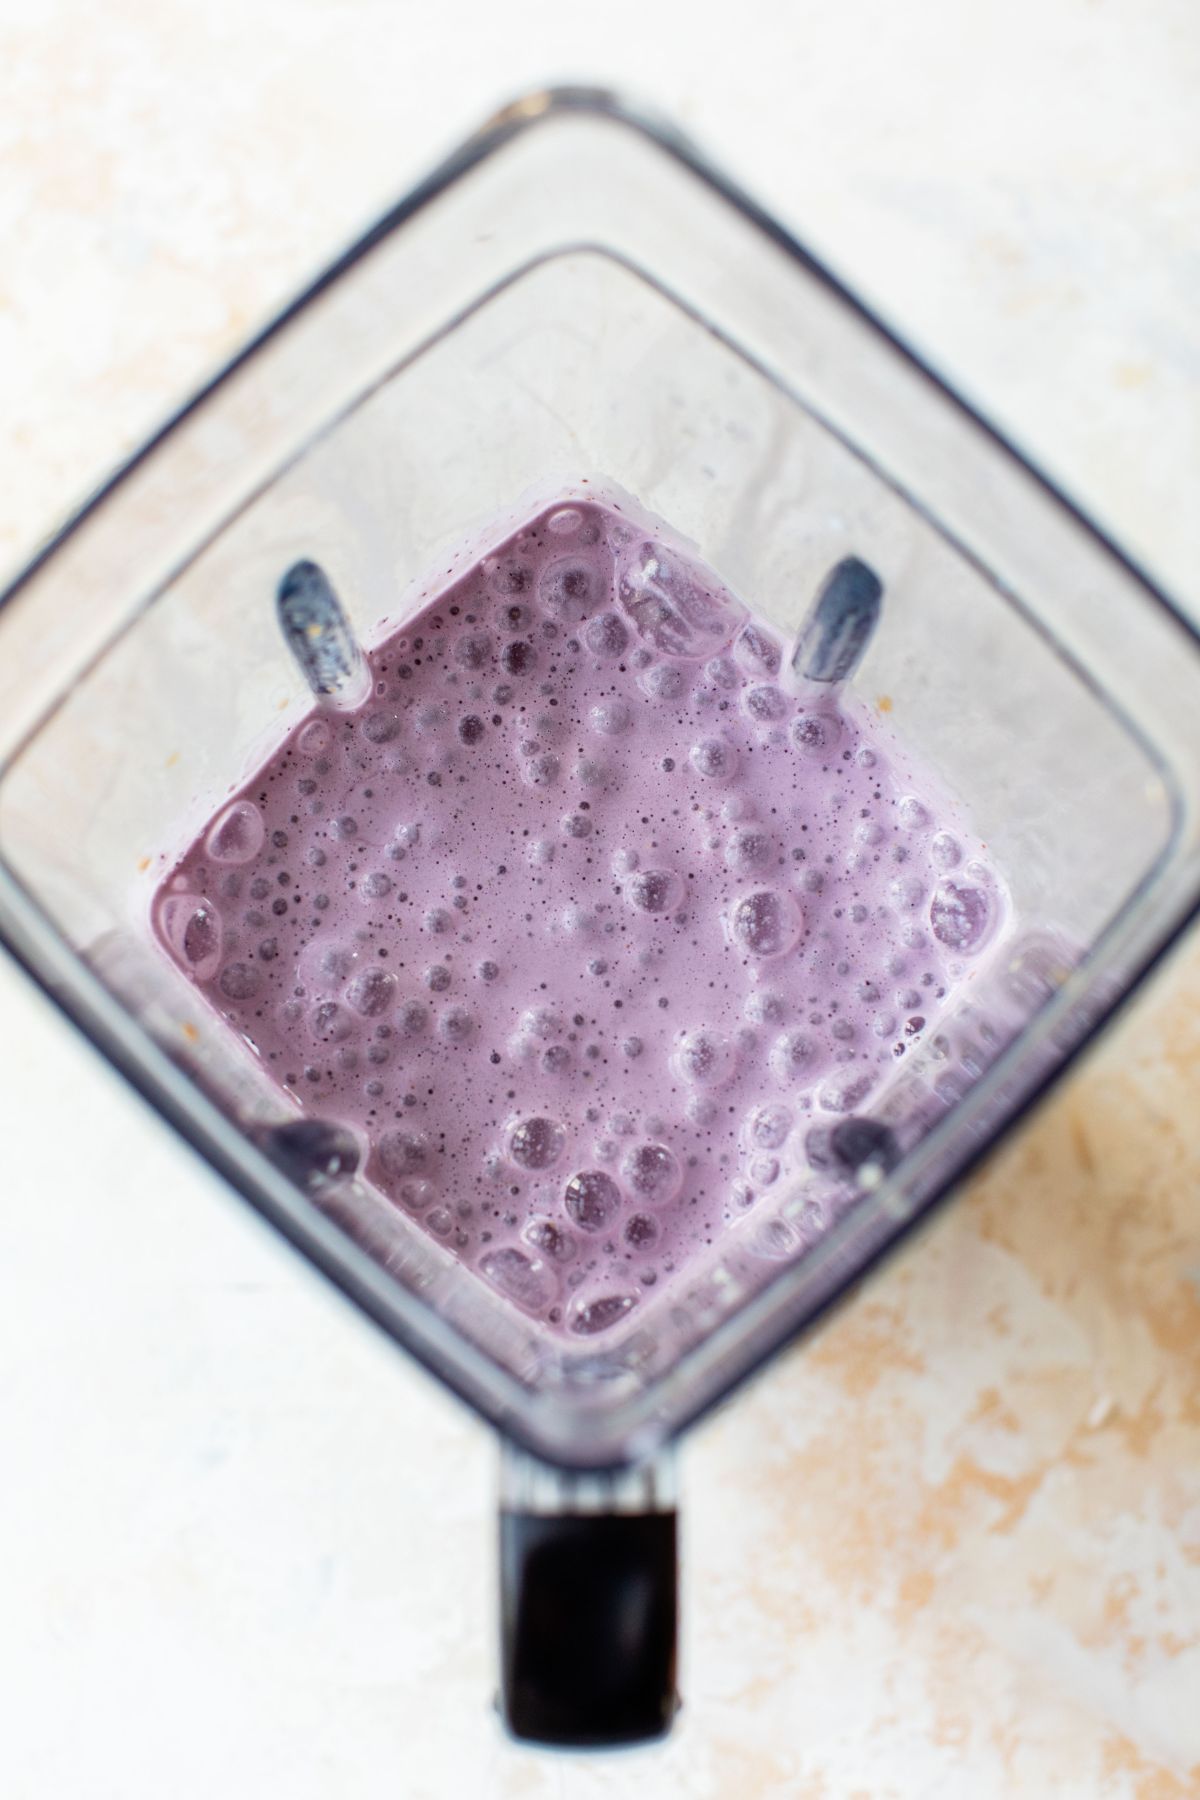 Blended blueberry smoothie in a blender.